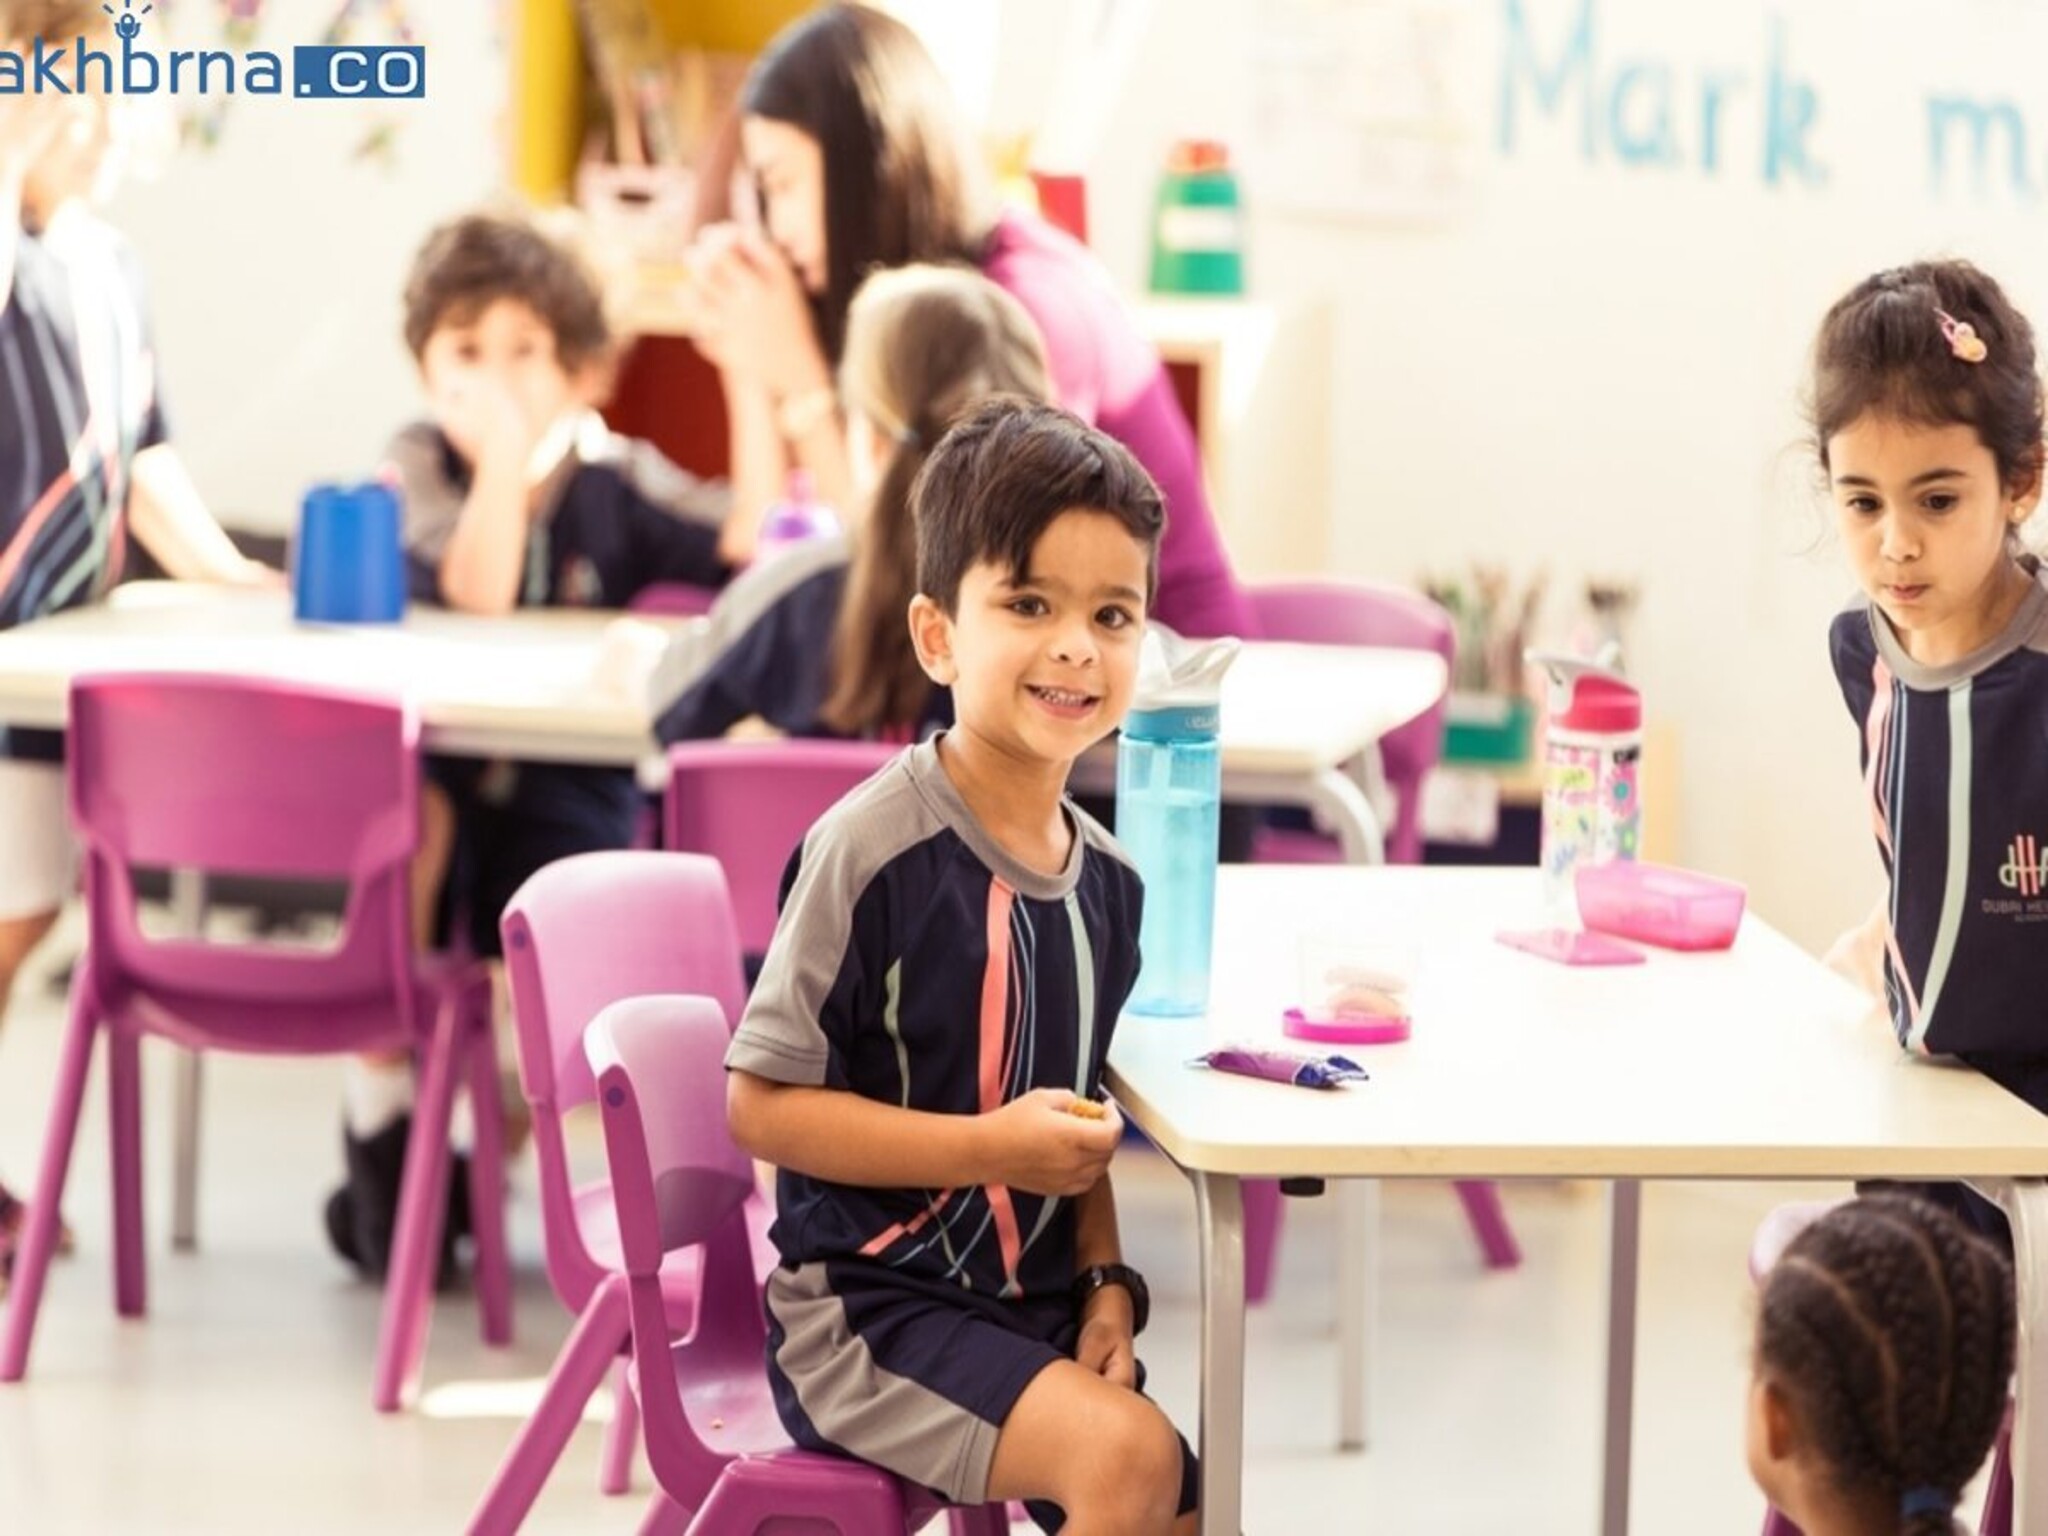 Custom Menus & Fees Exceed Dh100,000 inside one of Dubai Most Expensive Schools